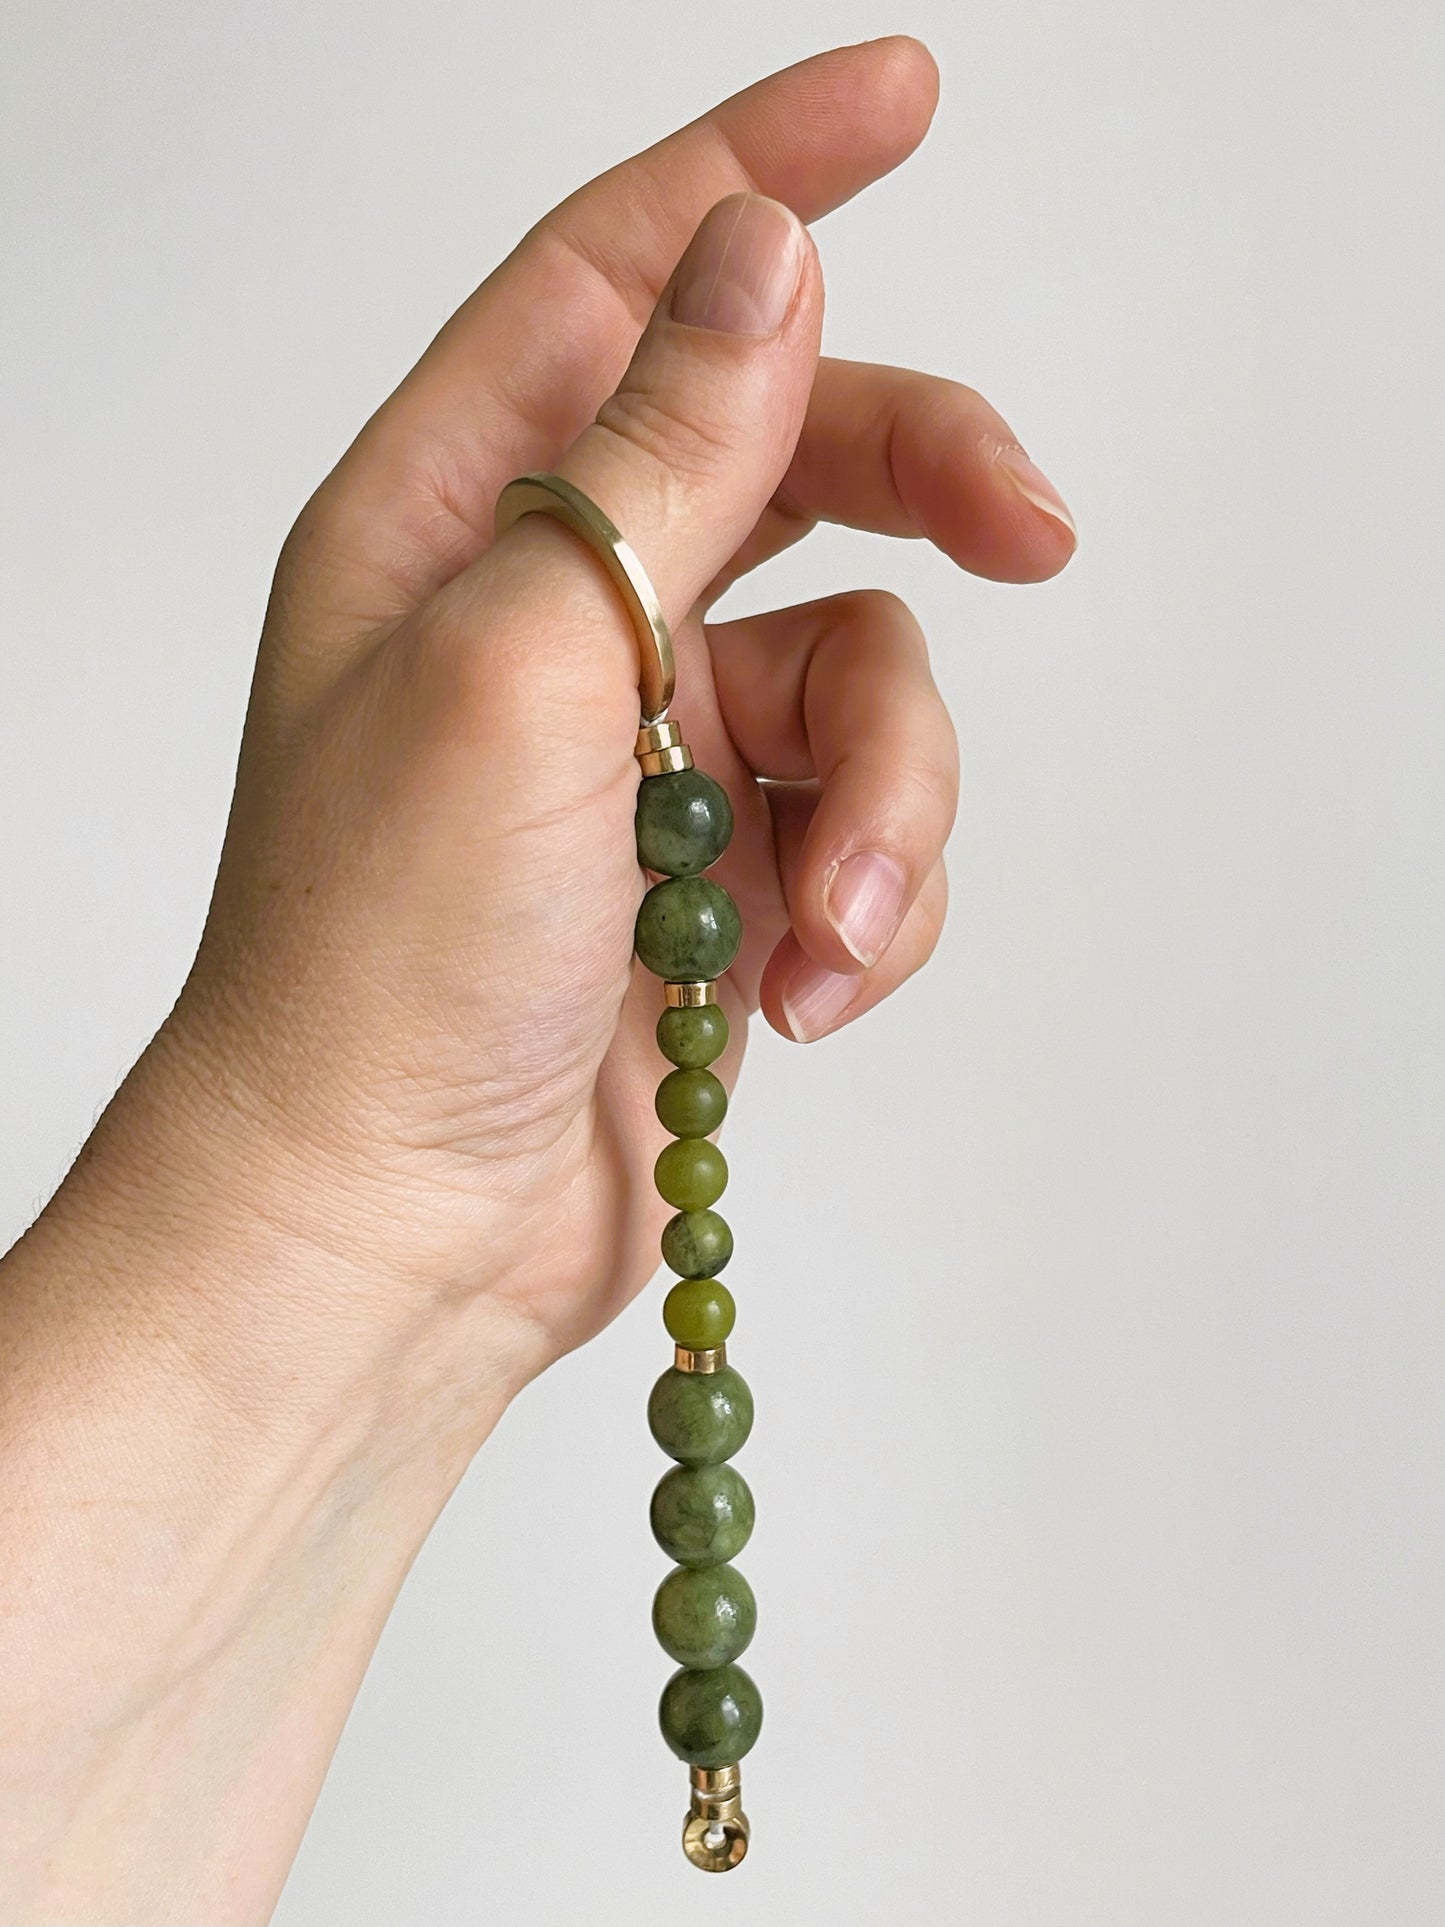 Jade Meditation & Breathing Beads - Serenity & Tranquility